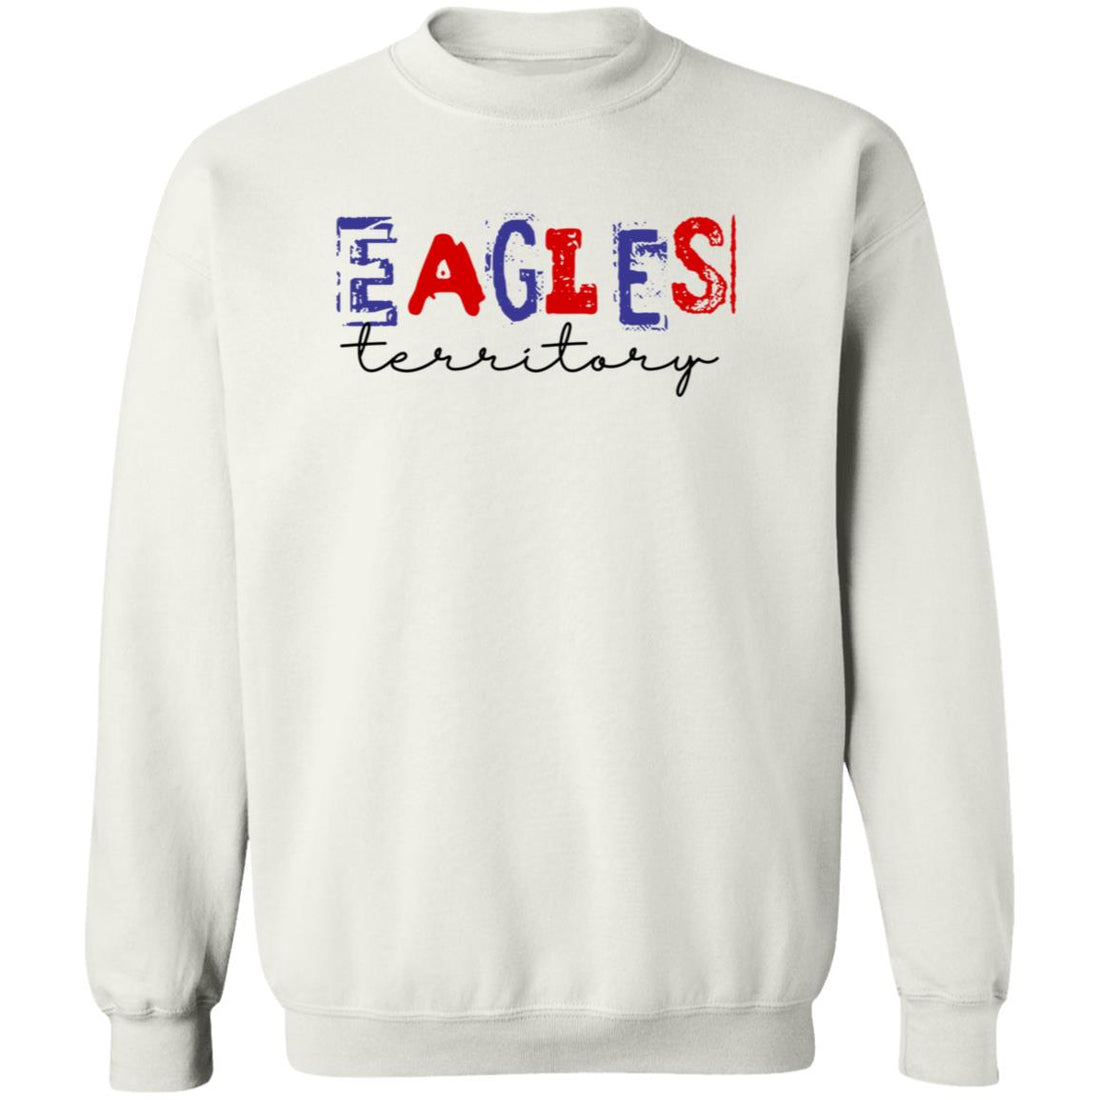 Eagles Territory Crewneck Pullover Sweatshirt - Sweatshirts - Positively Sassy - Eagles Territory Crewneck Pullover Sweatshirt